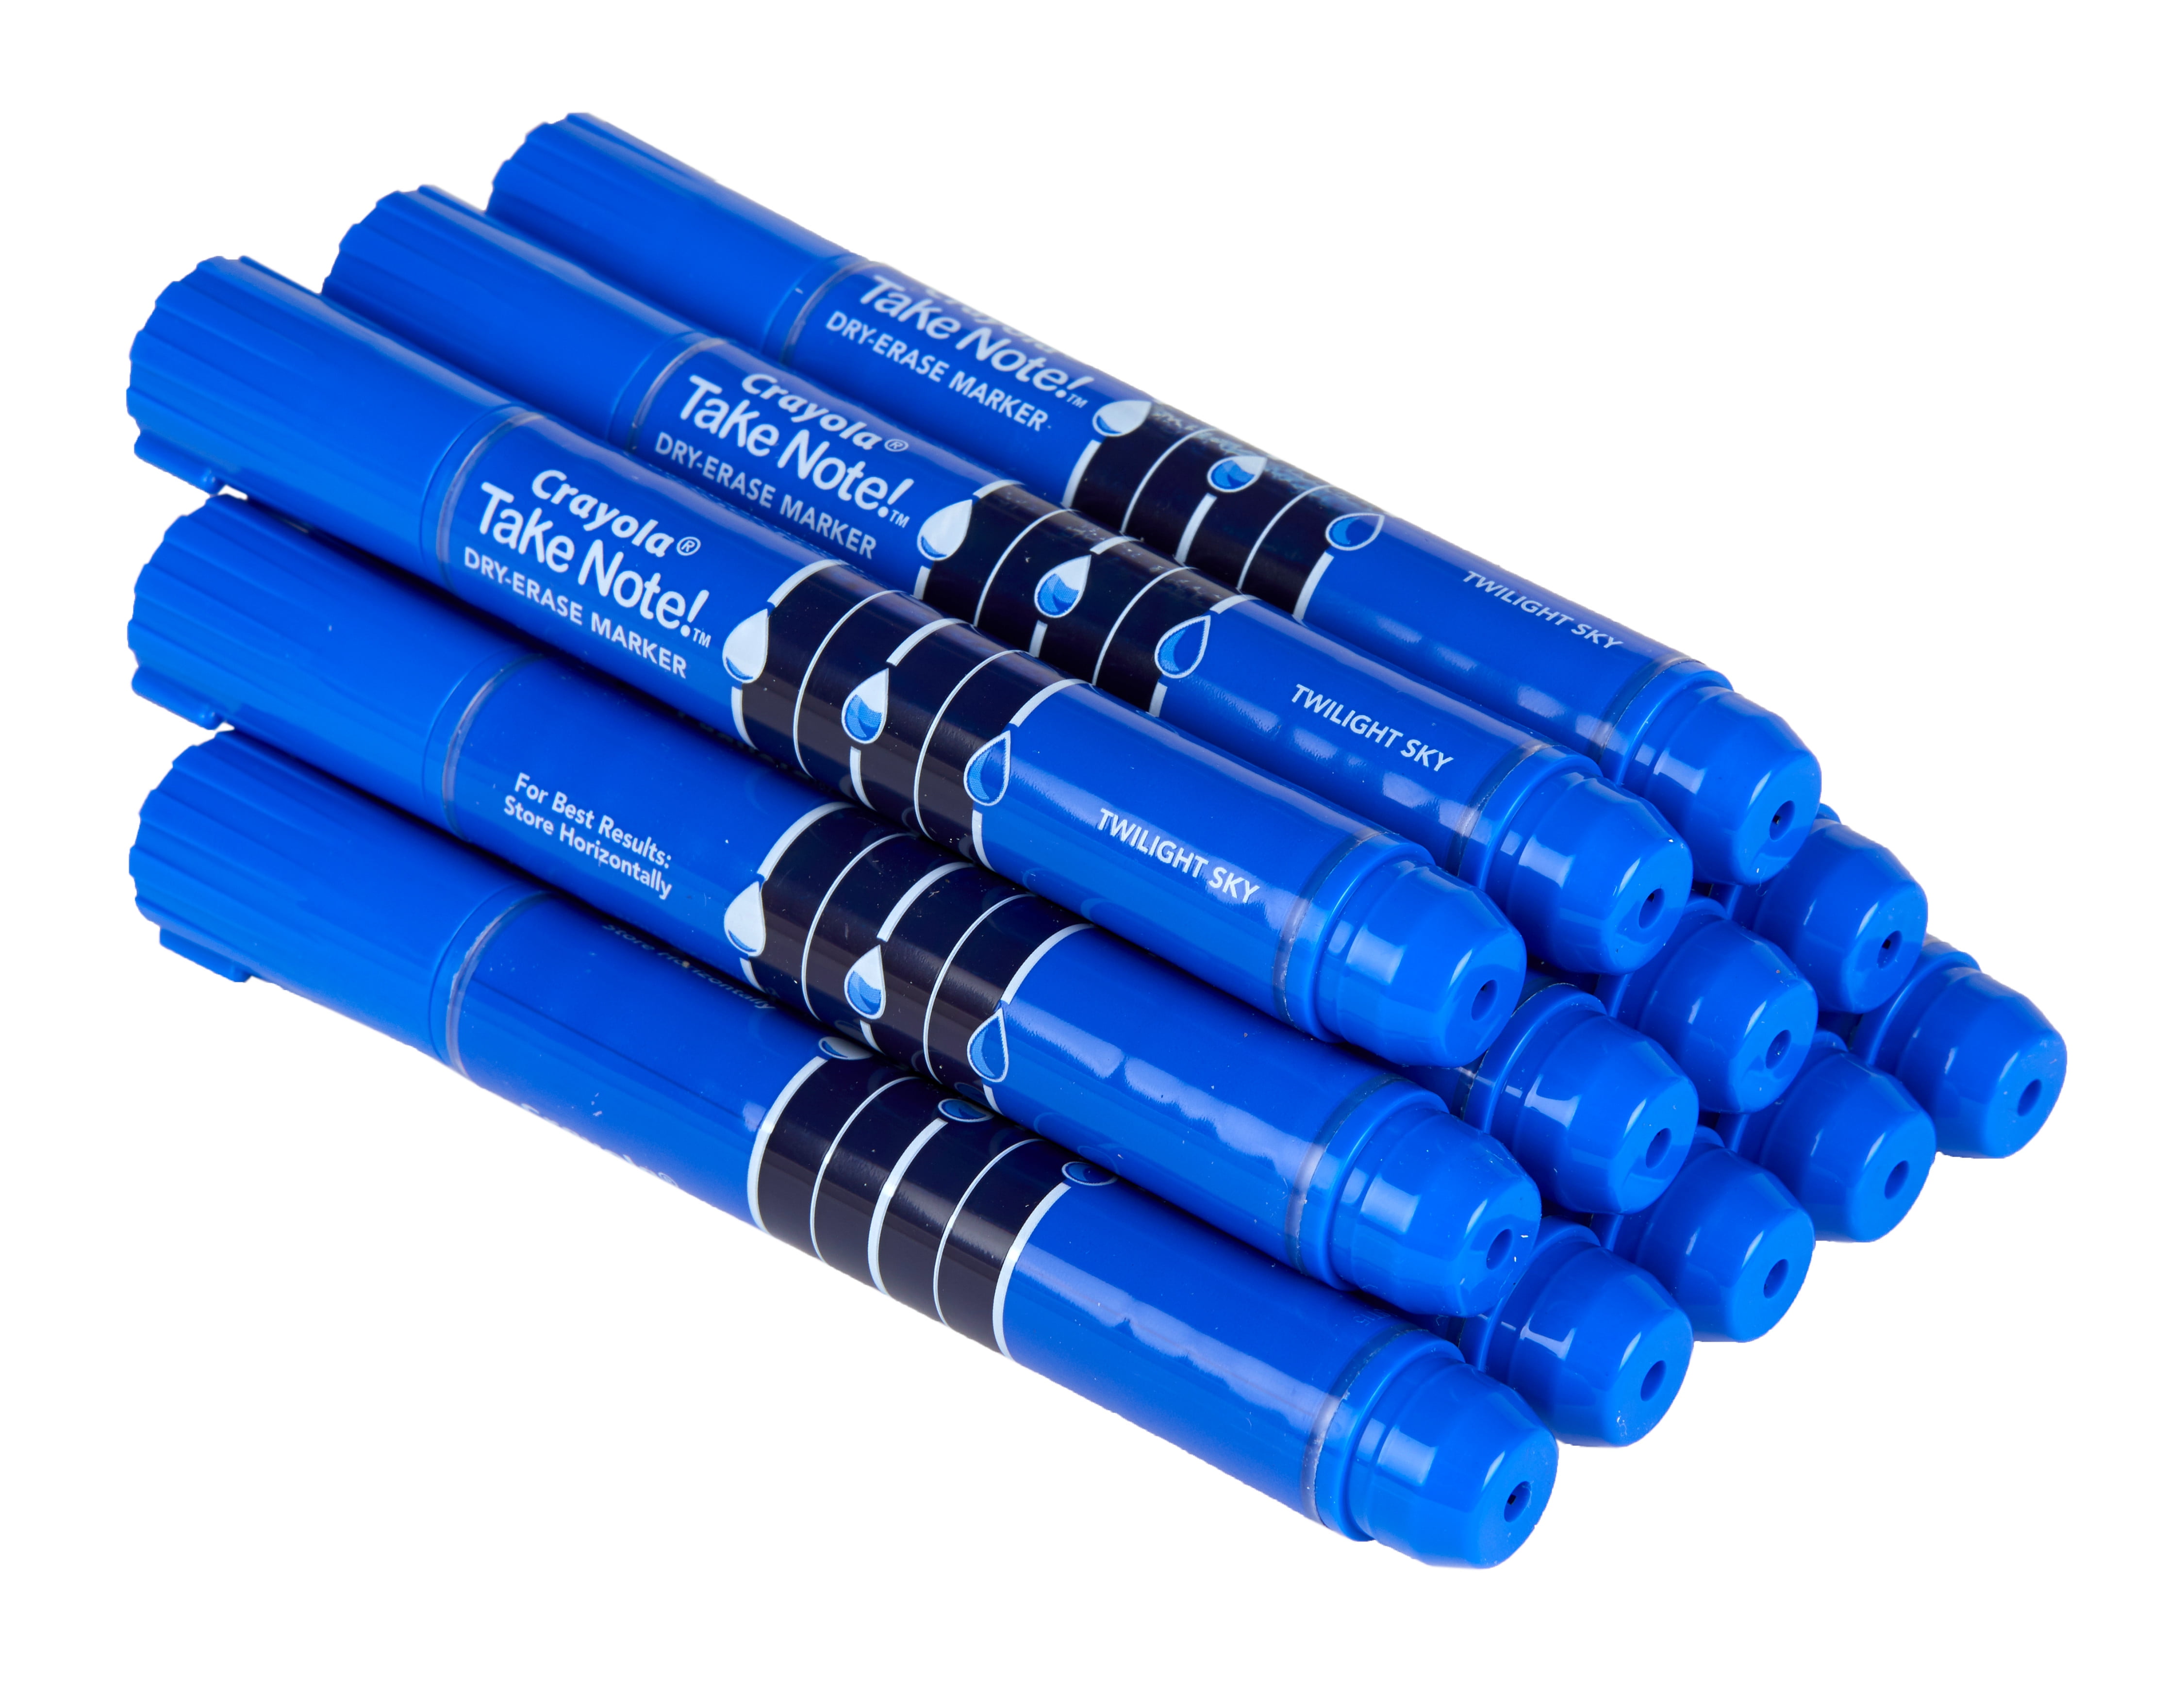 Crayola Take Note! Dry Erase Markers, Chisel Tip, Blue/Black, Set of 2